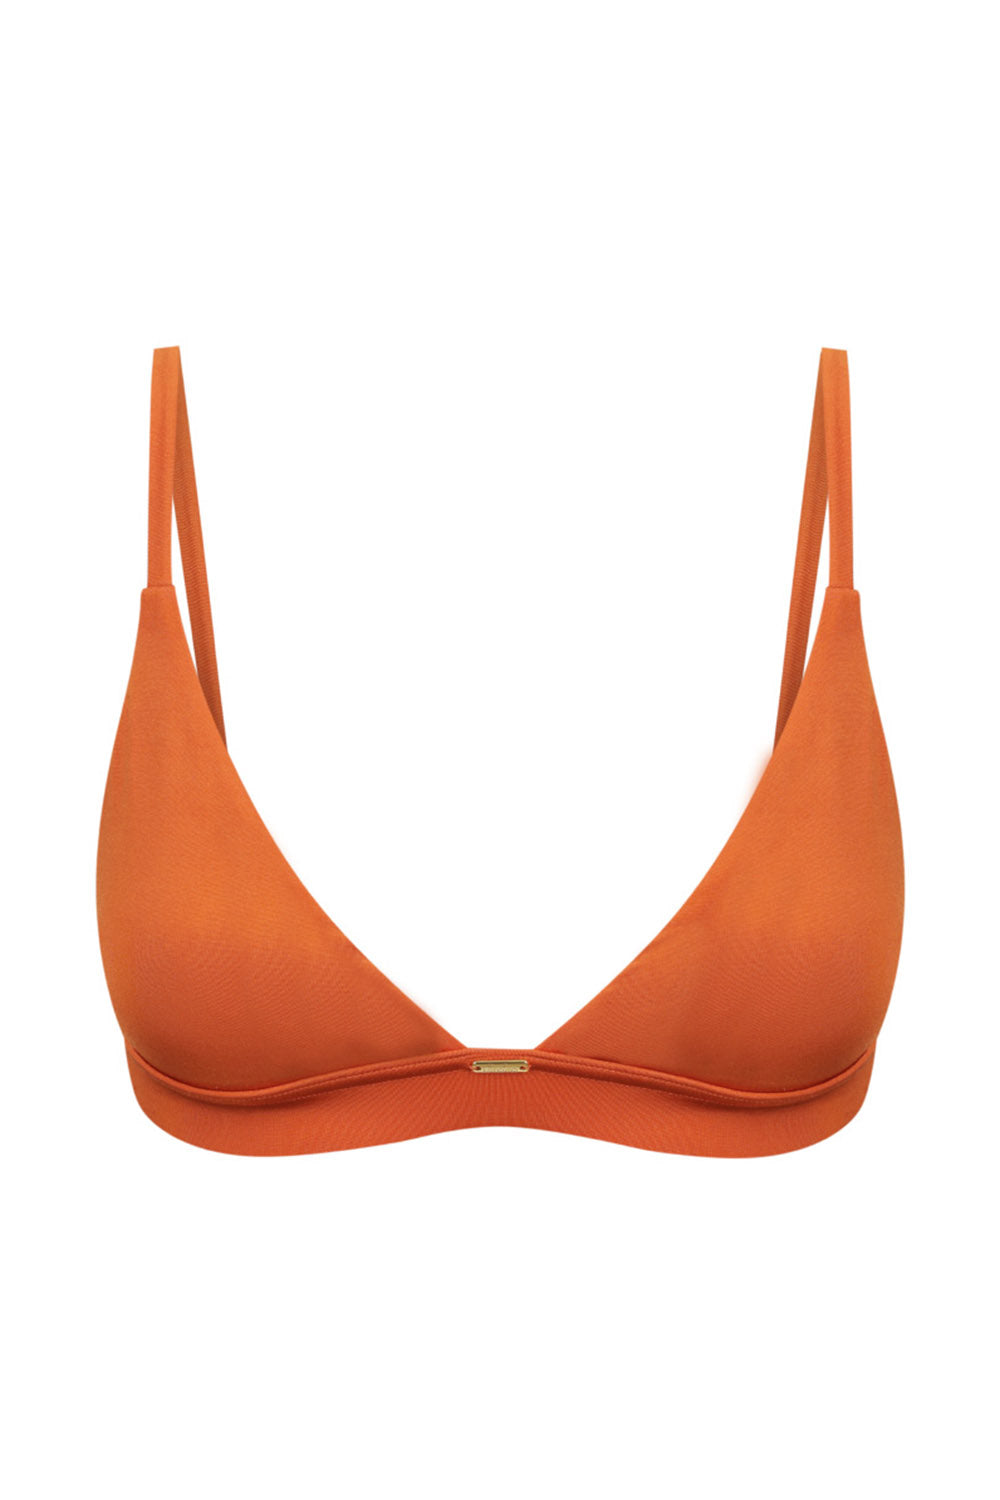 Sustainable Super Comfy Santa Teresa swimwear bikini top - Dkoko